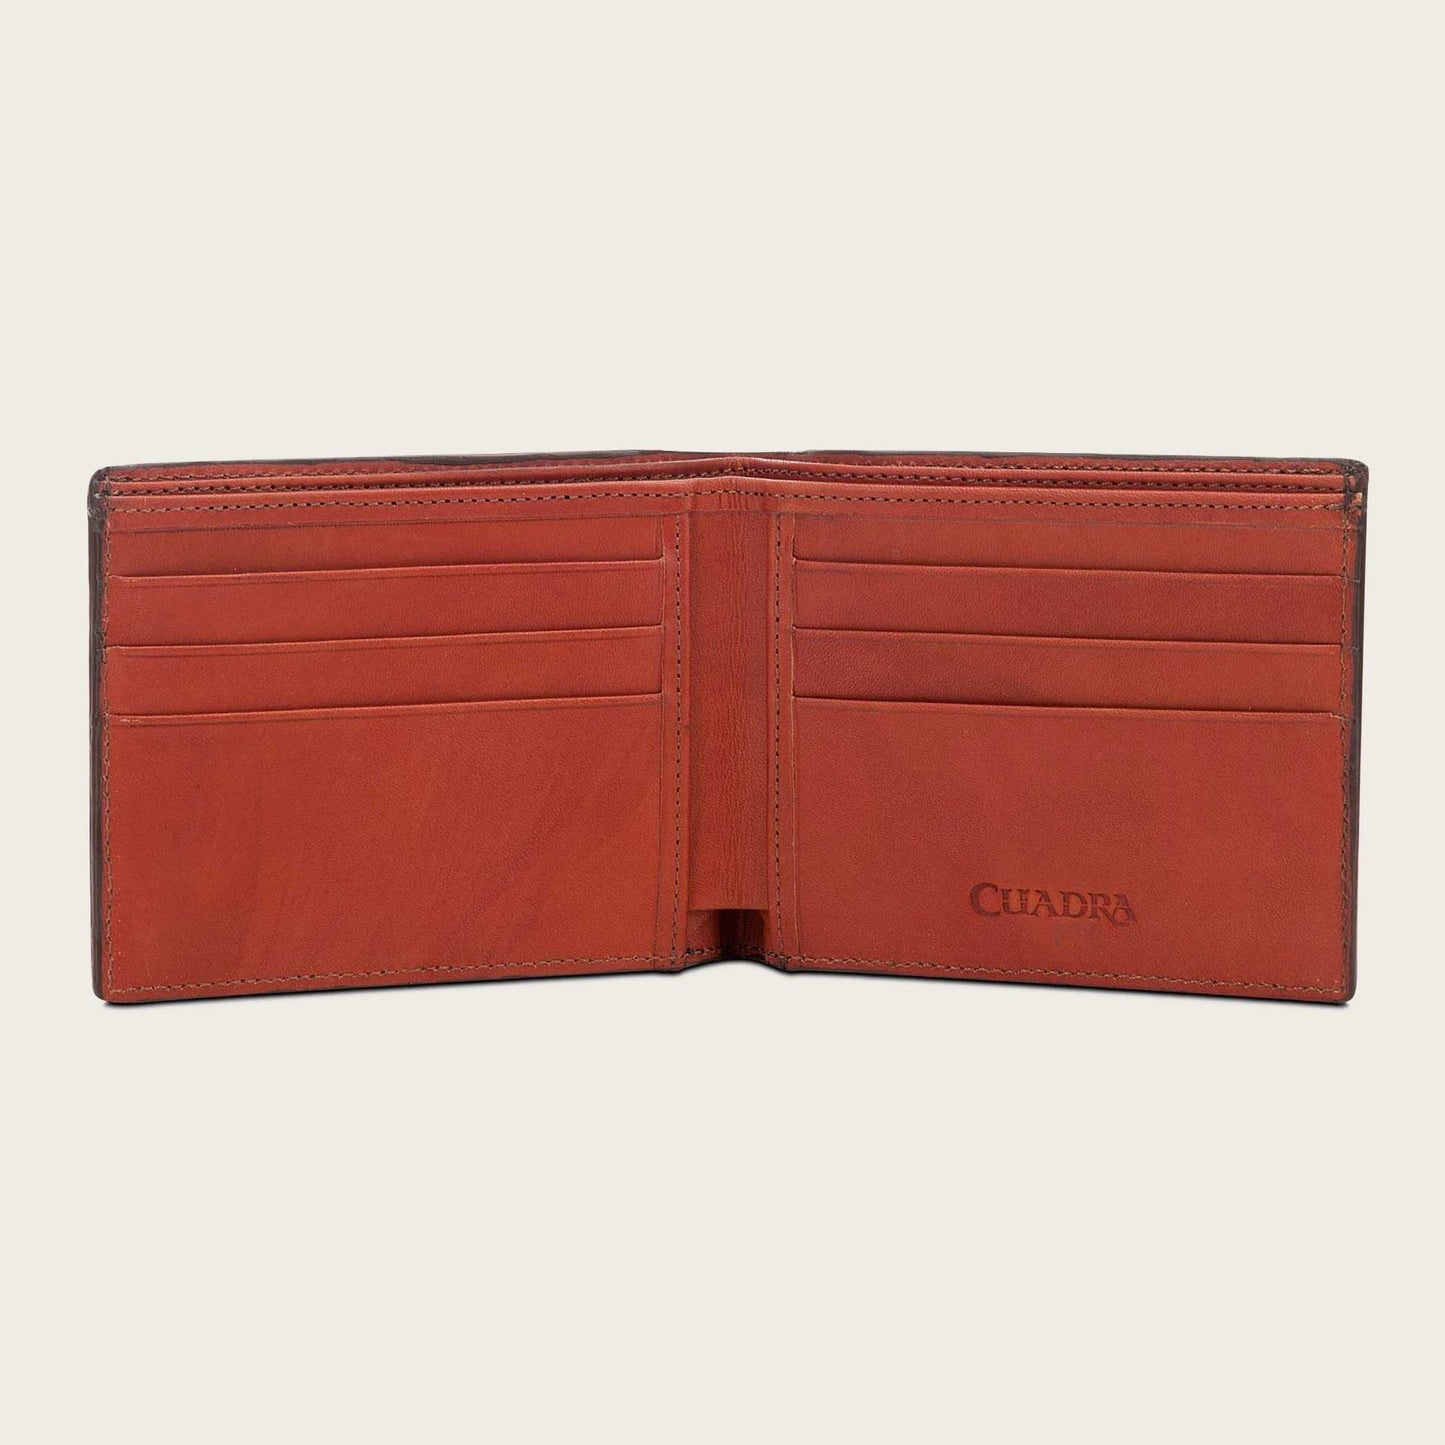 Handmade brown leather bifold wallet